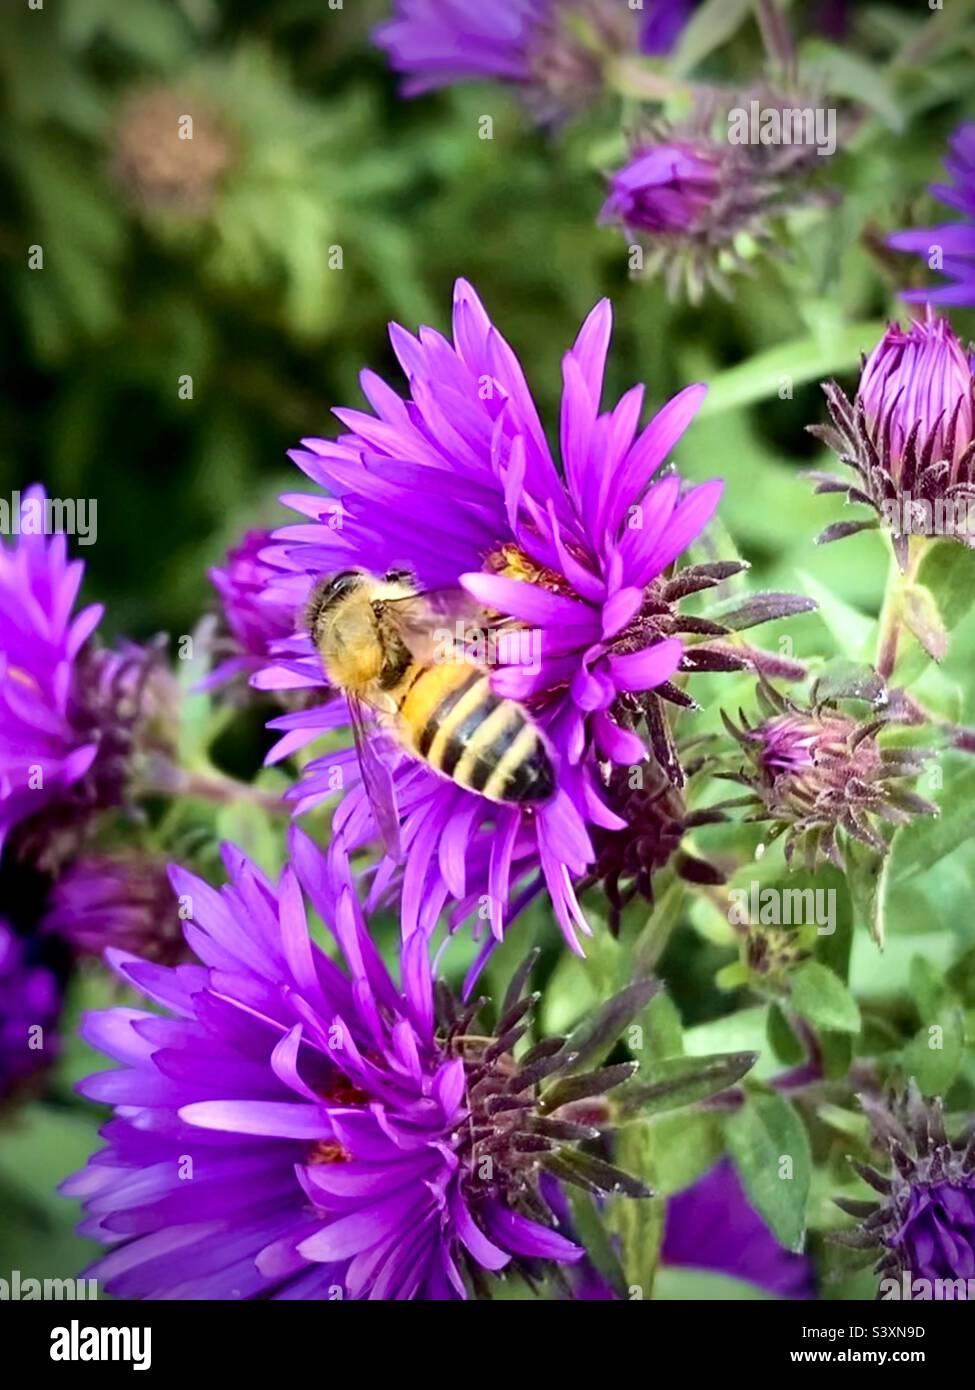 WESTERN Honeybee sur un Aster violet Banque D'Images